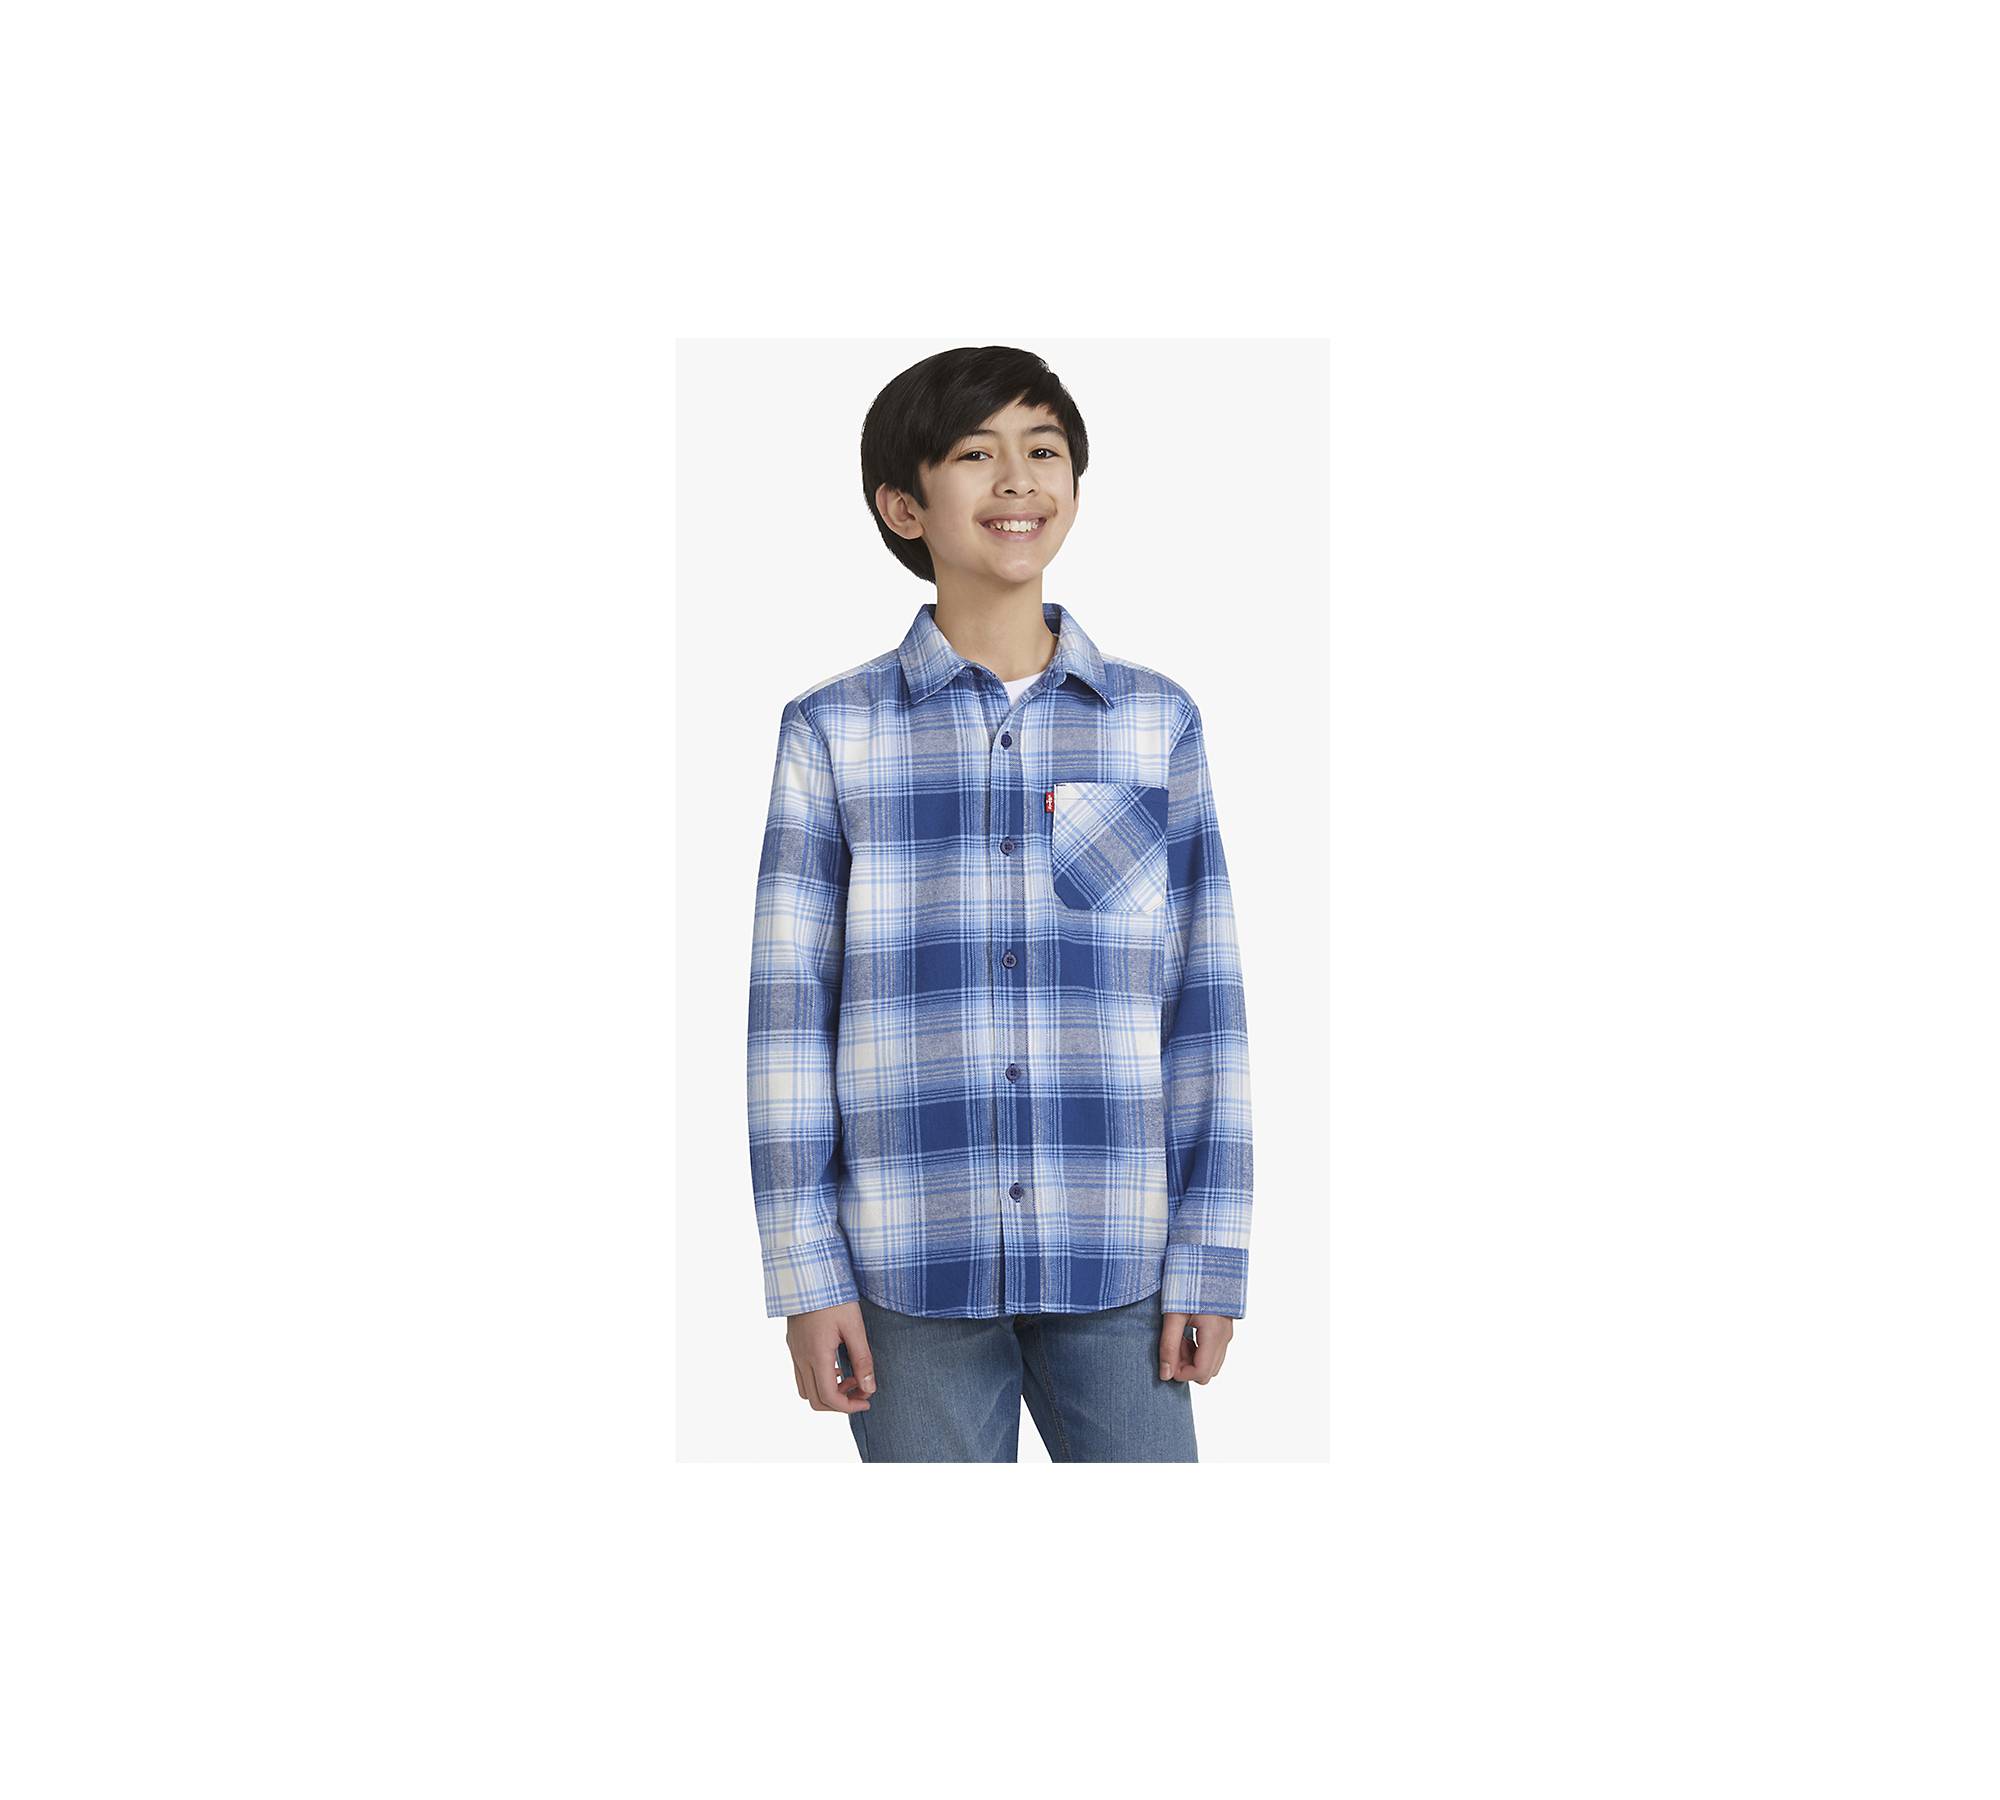 Long Sleeve Flannel Shirt Big Boys S-XL 1